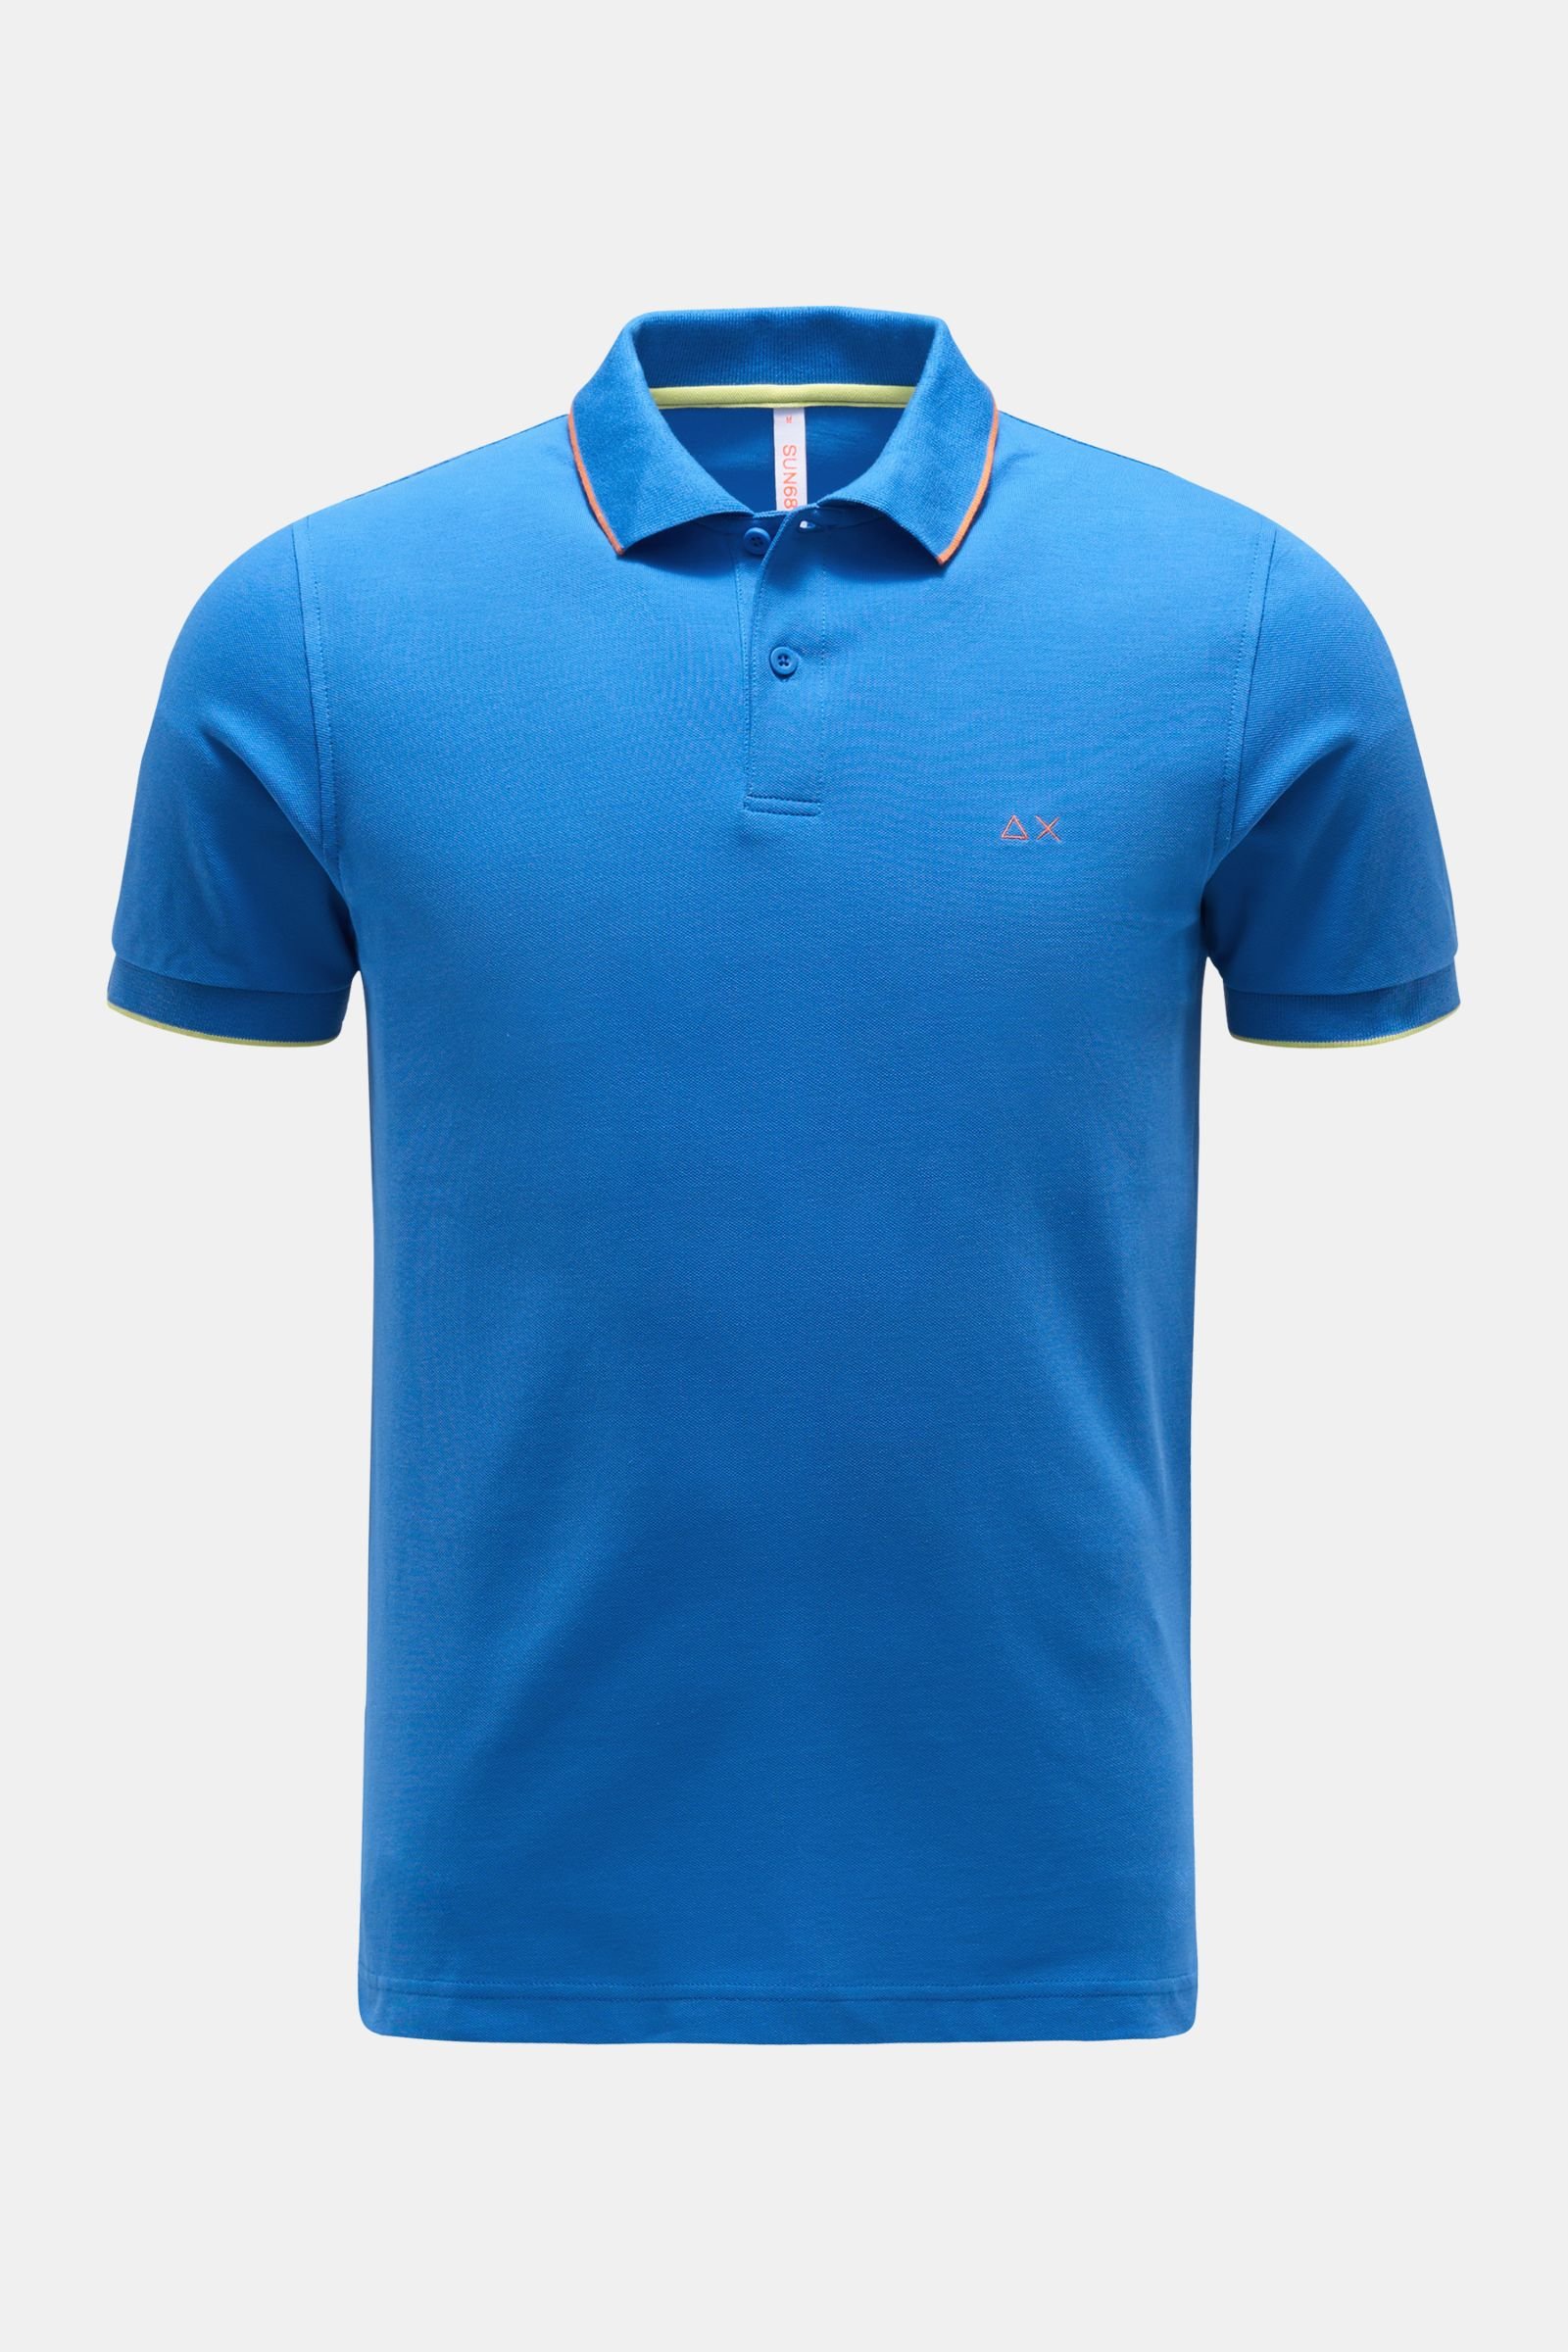 Polo shirt blue